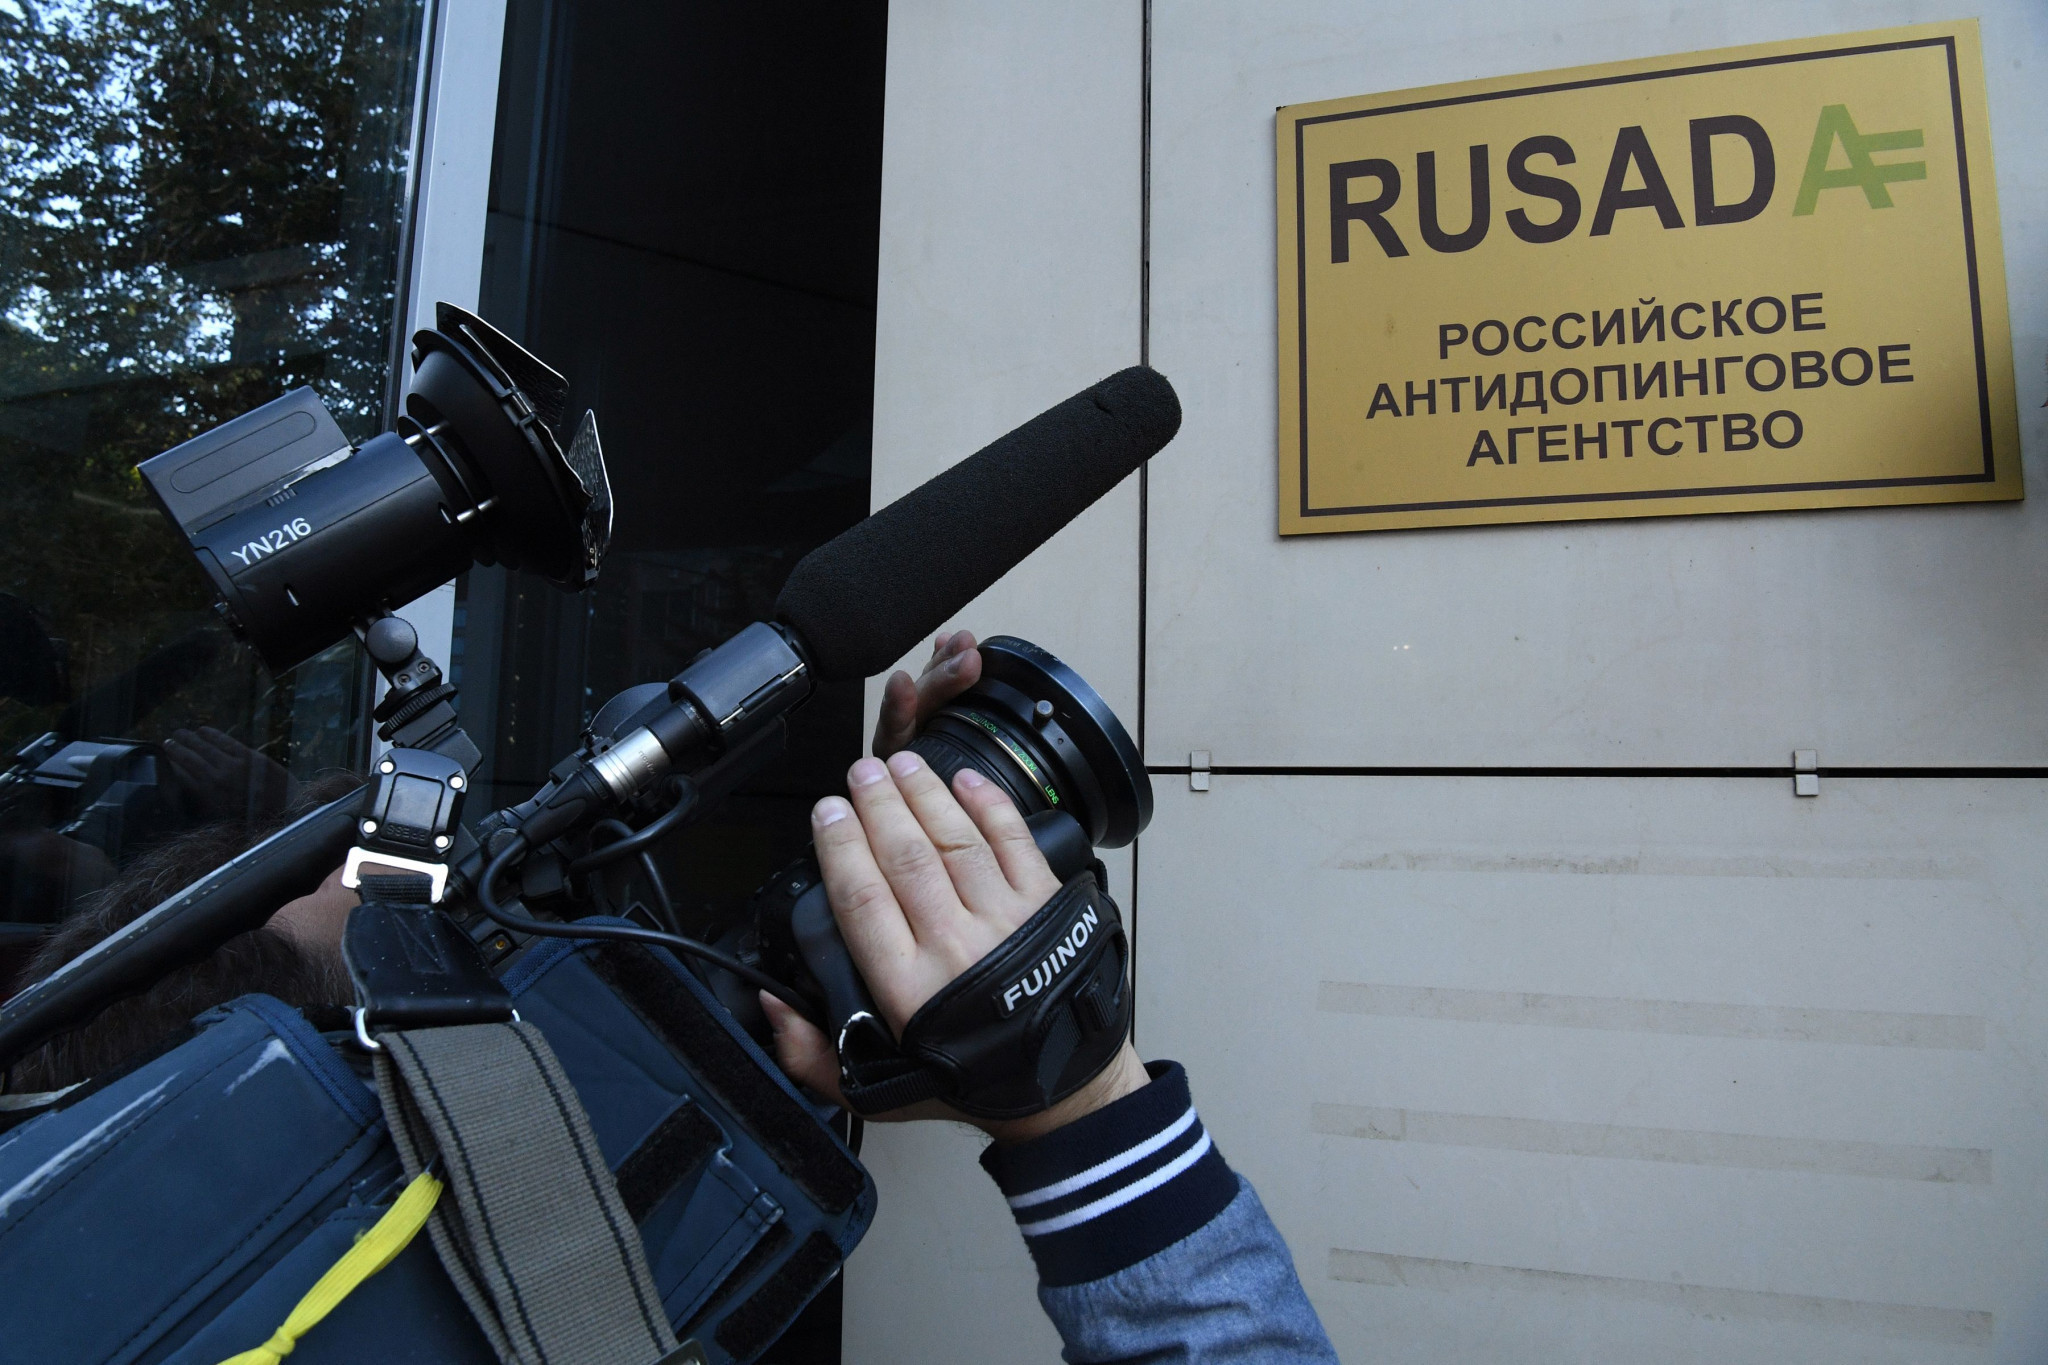 Independent Iljukov quits RUSADA Supervisory Board over Russian invasion of Ukraine